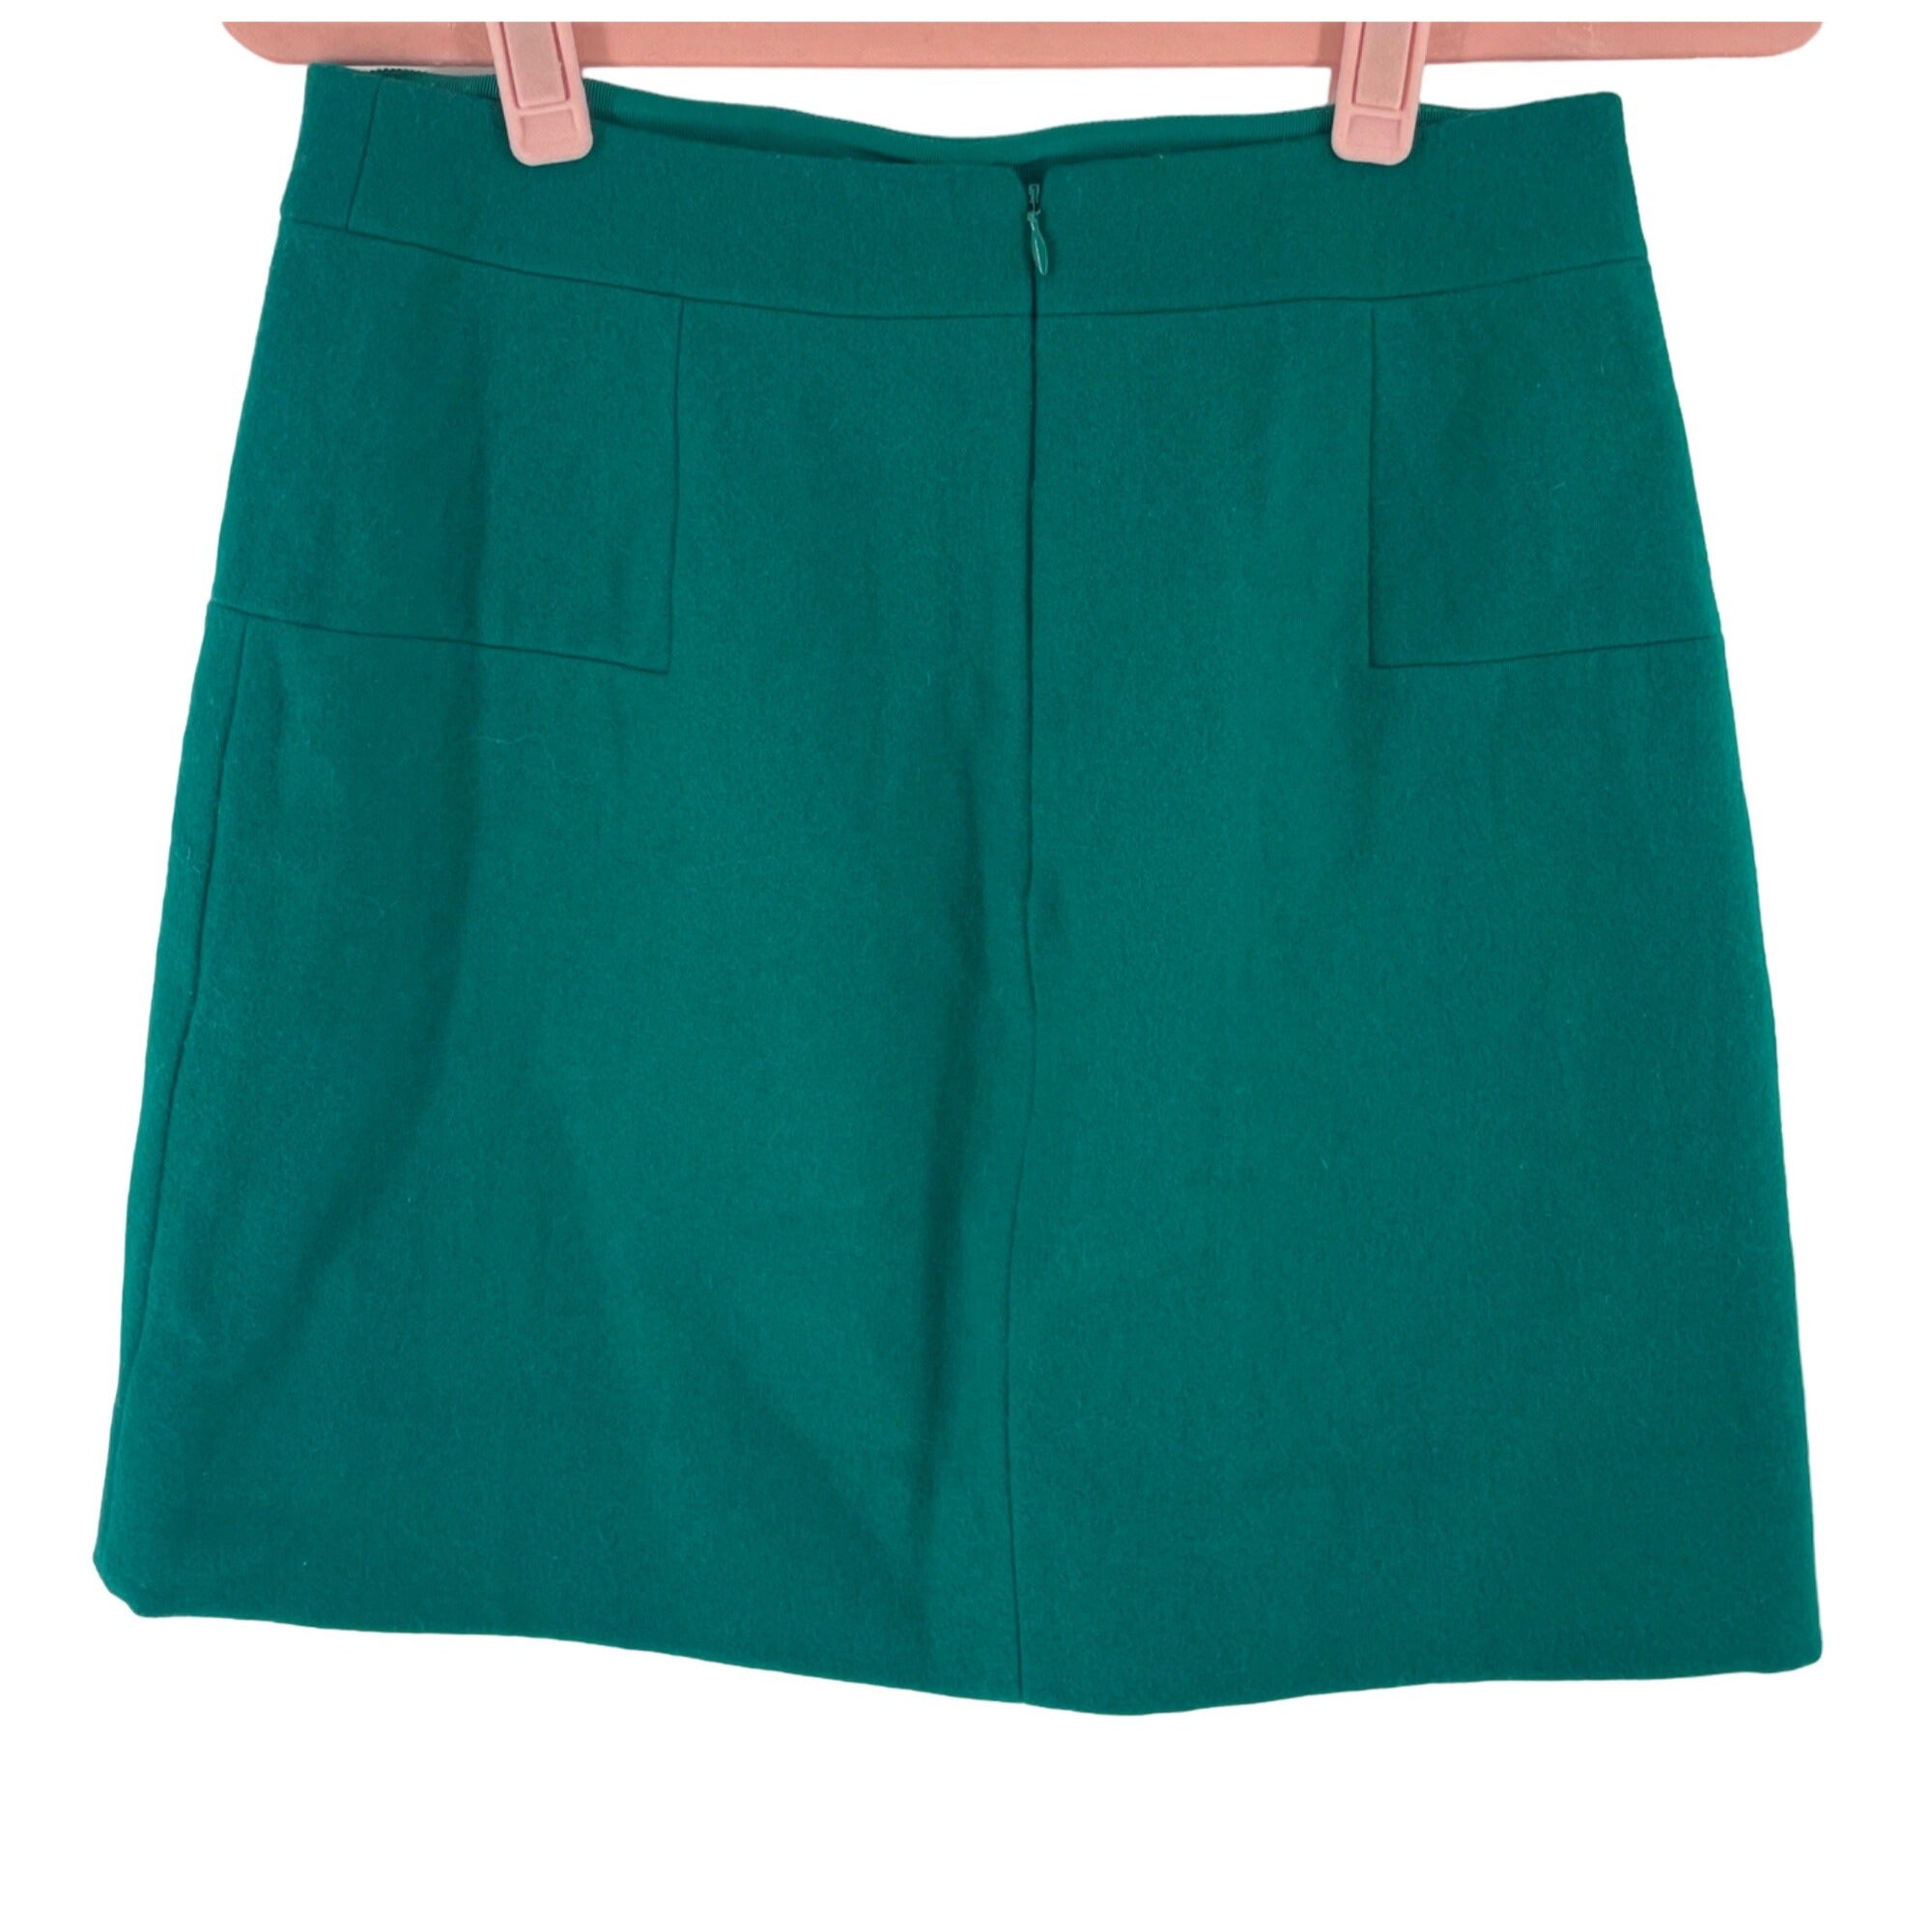 J. Crew Women’s Size 2 Green Wool/Nylon Mini Skirt